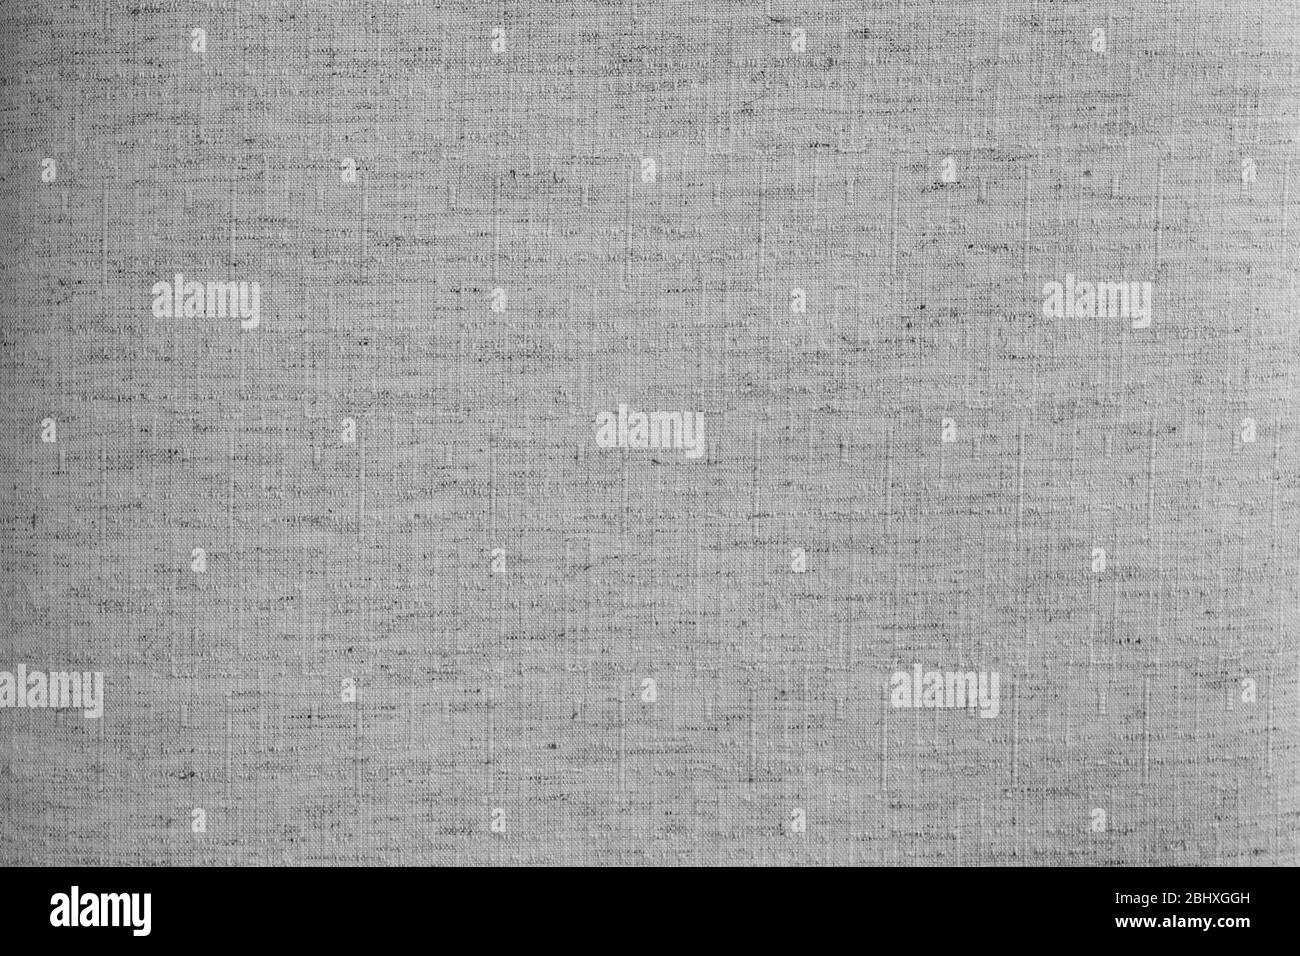 Fabric texture background Stock Photo - Alamy